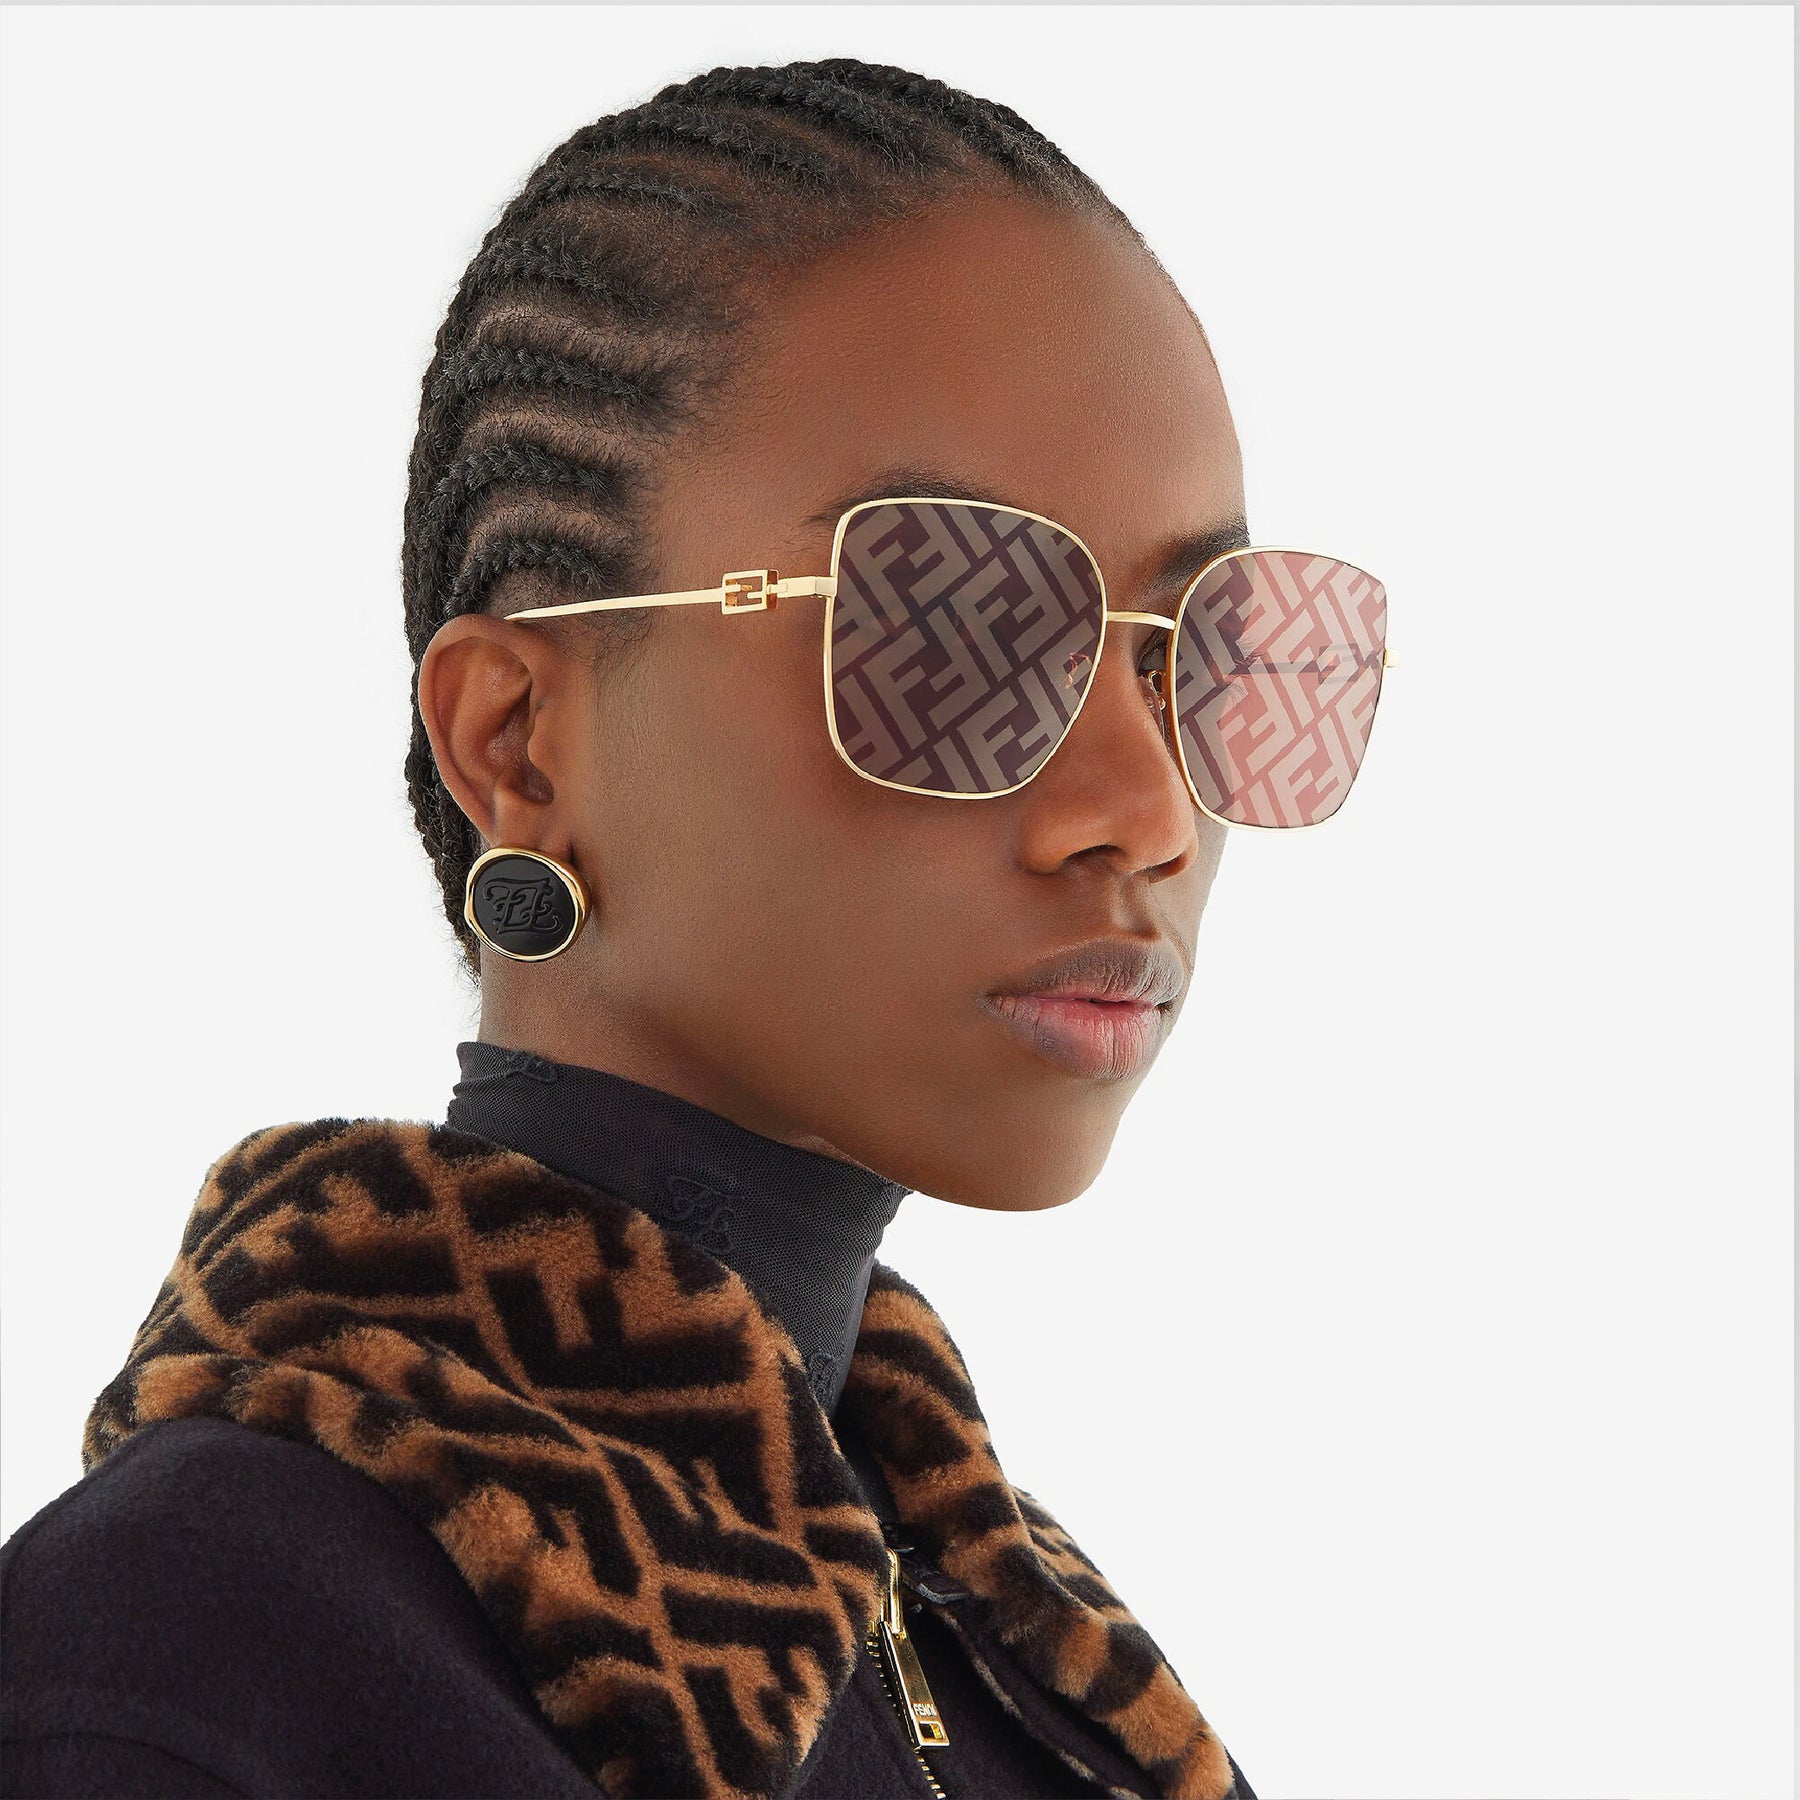 Fendi First oversized square-frame gold-tone sunglasses